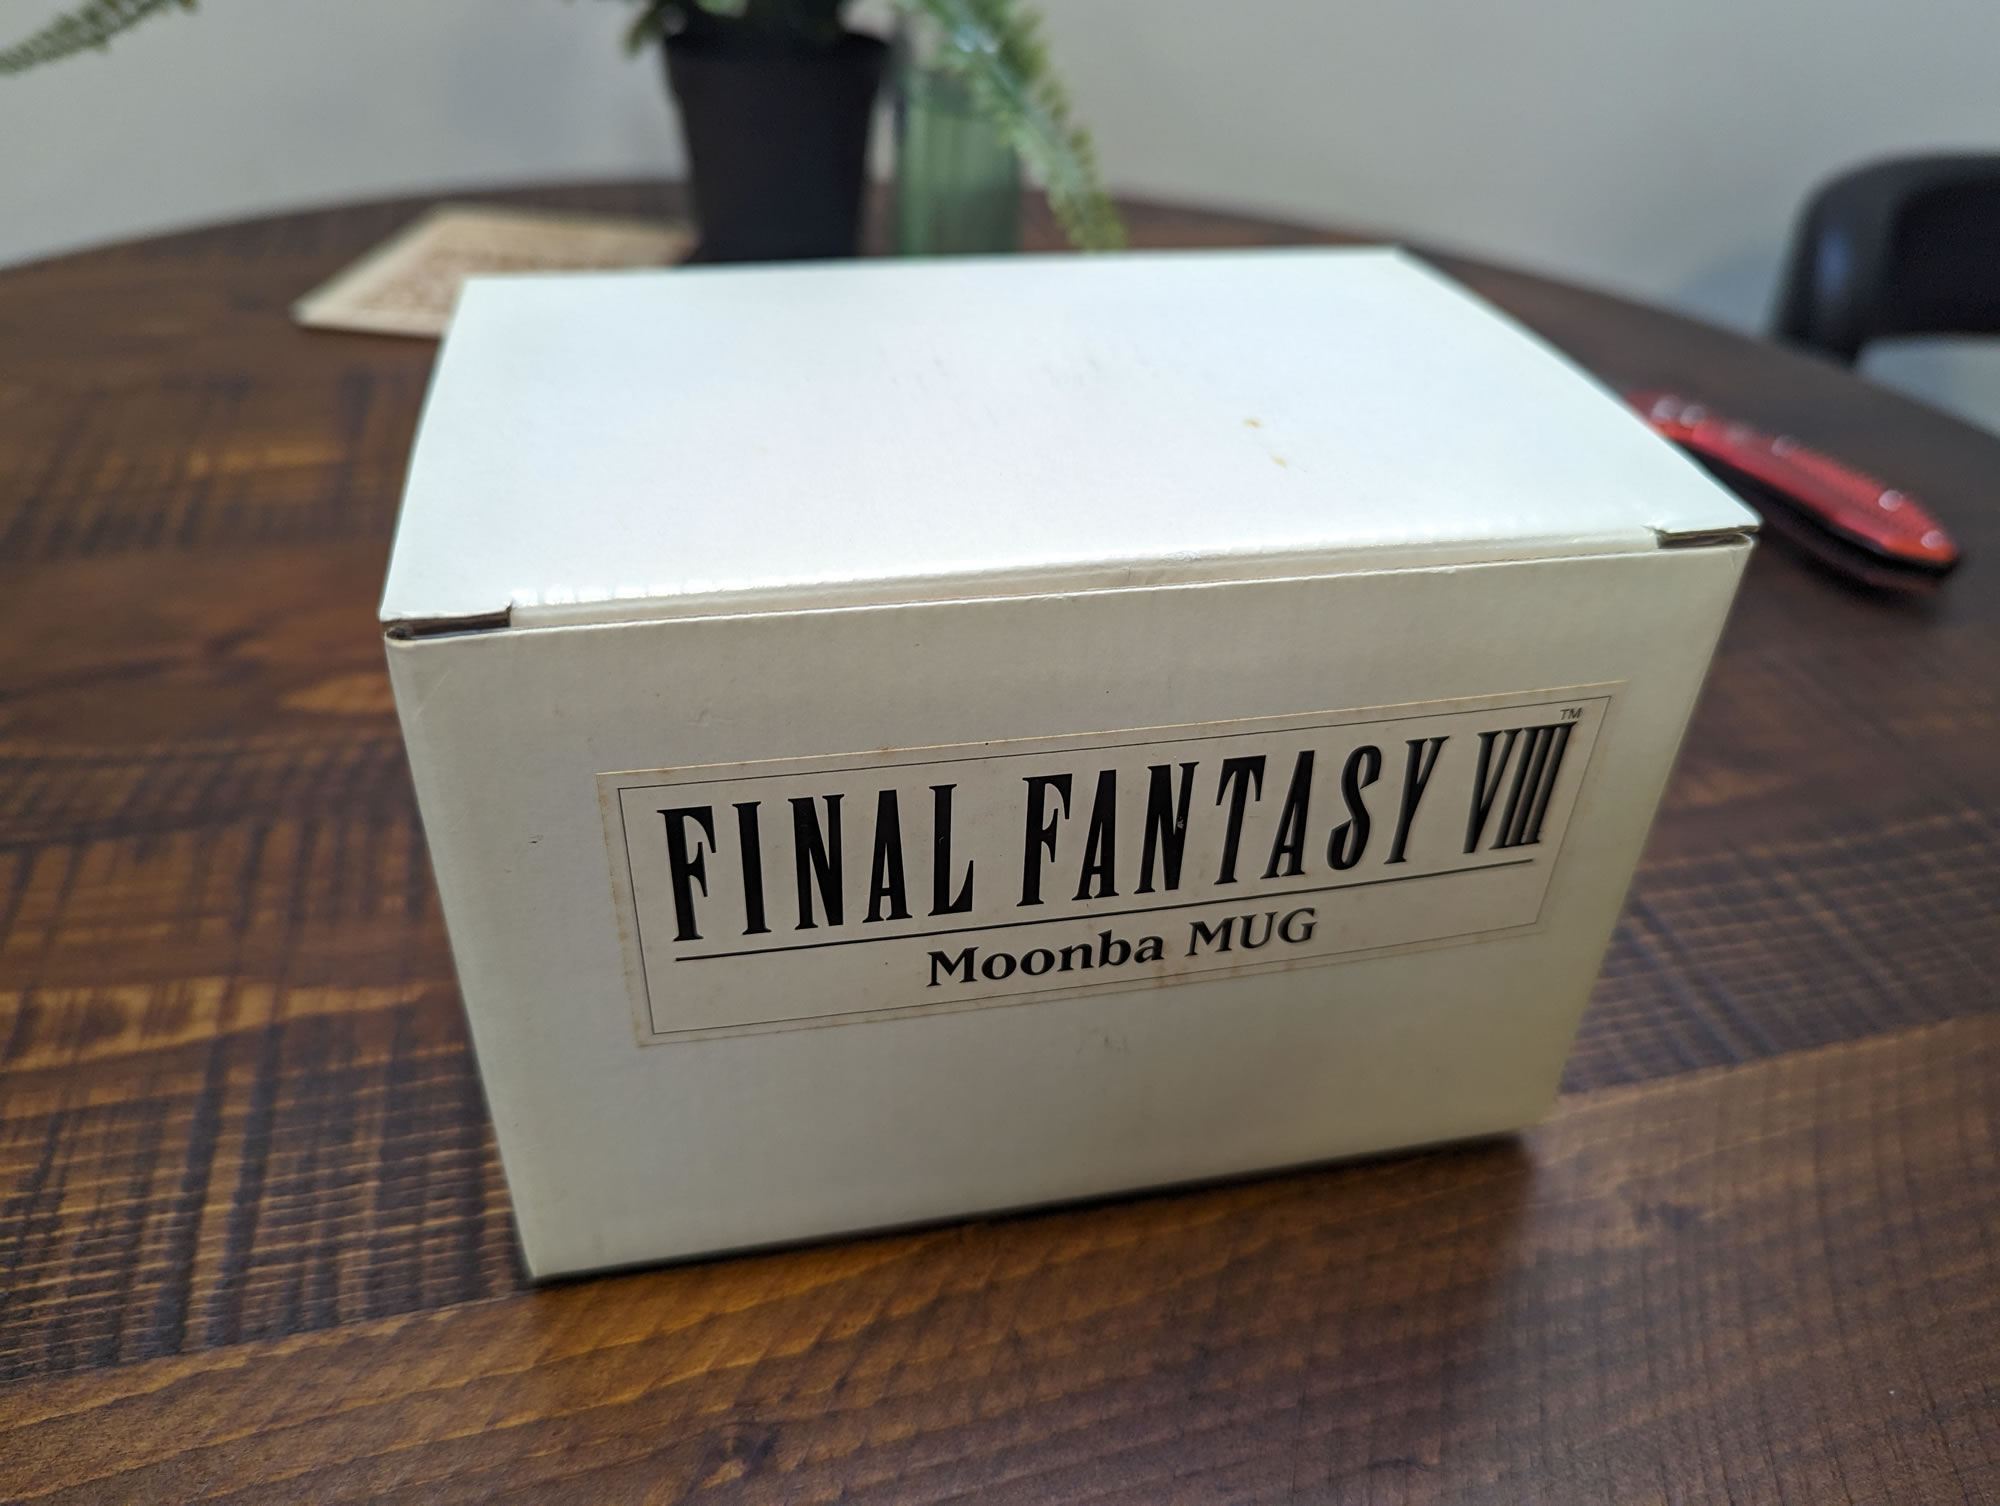 A box labeled "Final Fantasy VIII Moonba Mug."